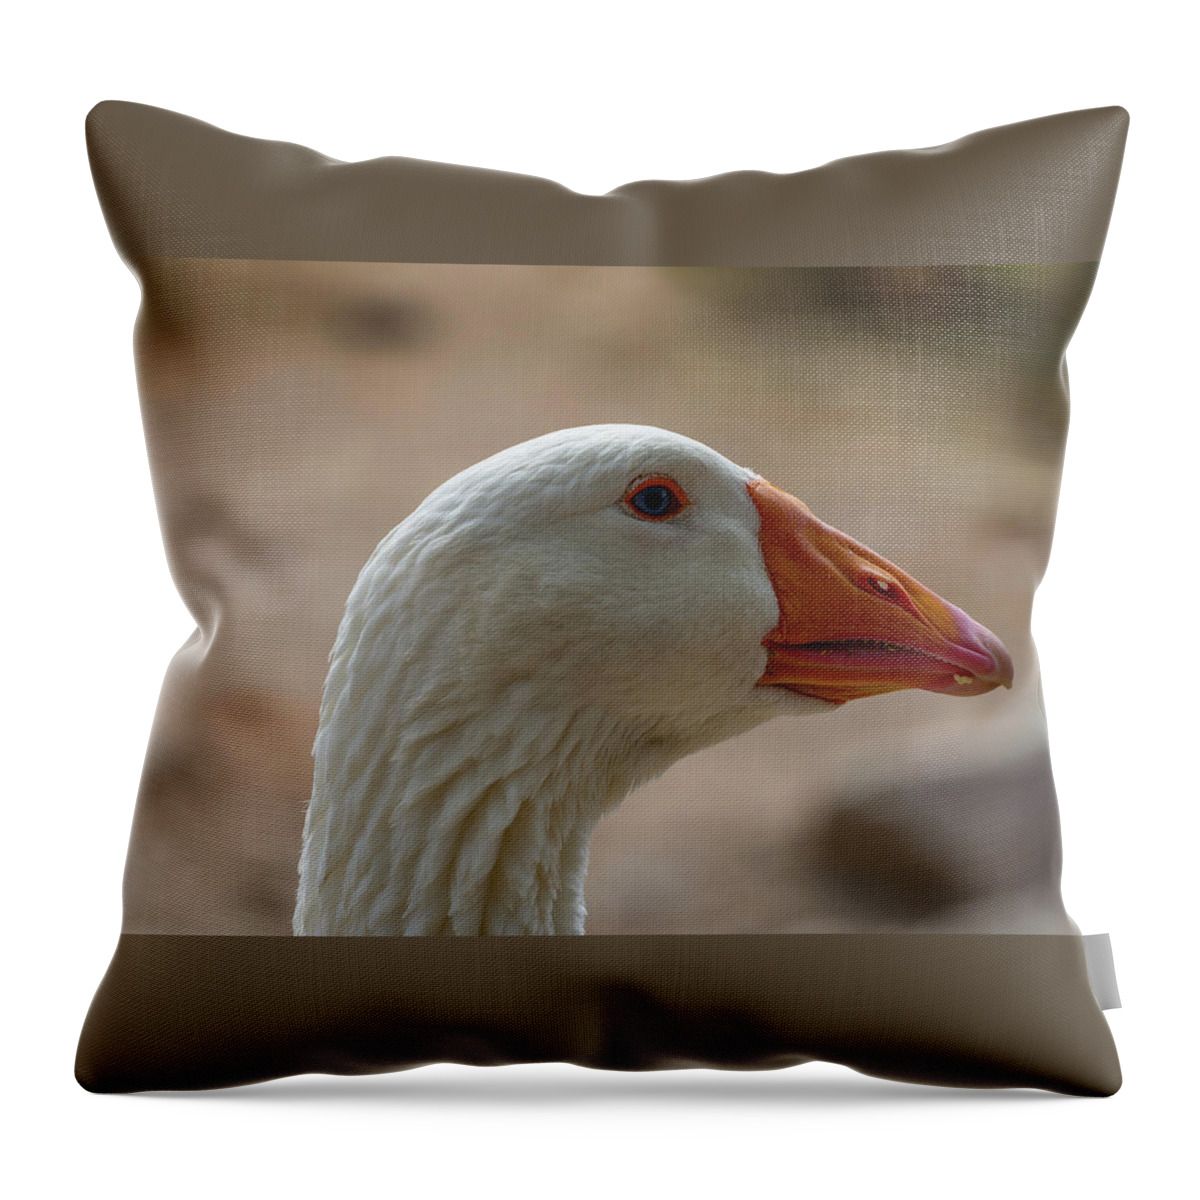 Bird Throw Pillow featuring the photograph Domestic Goose by Douglas Killourie